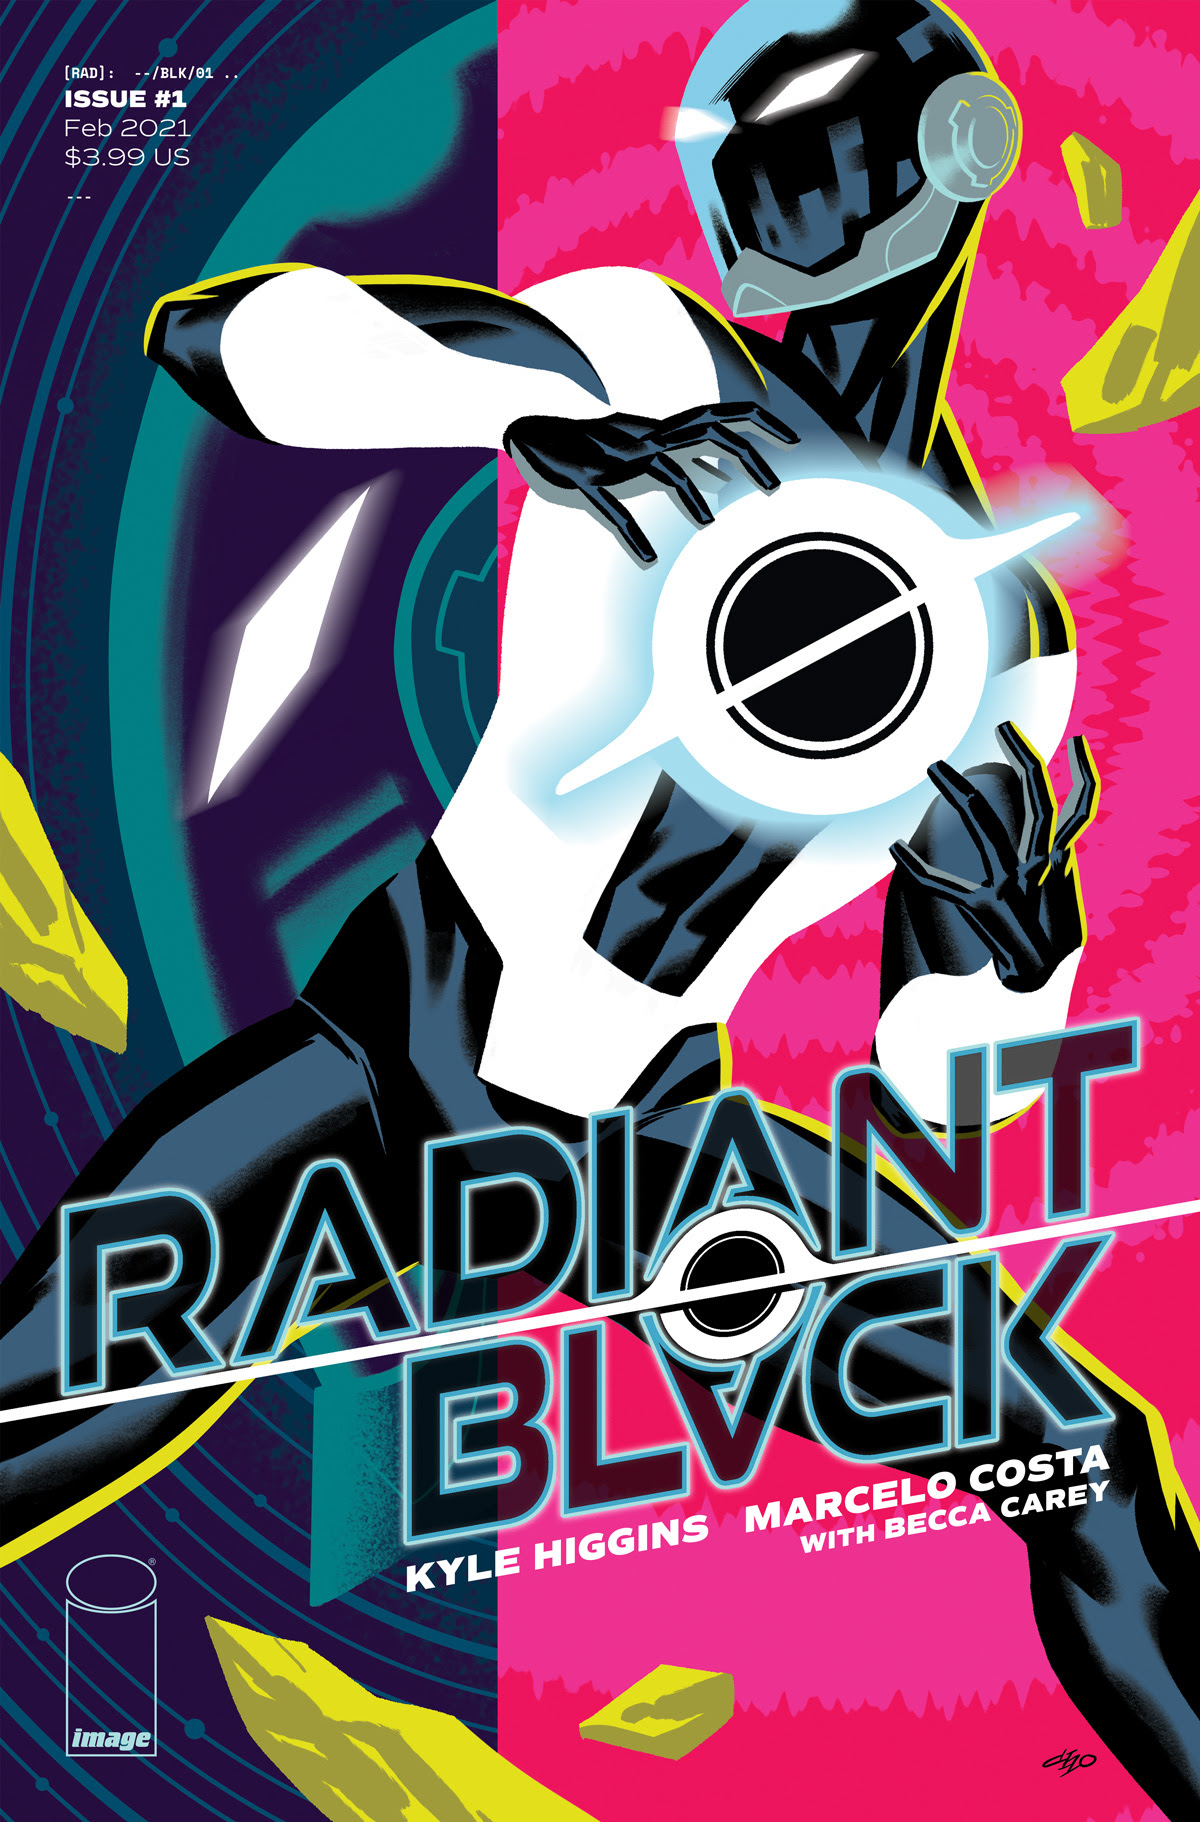 Image Comics to launch new superhero series 'Radiant Black' February 2021